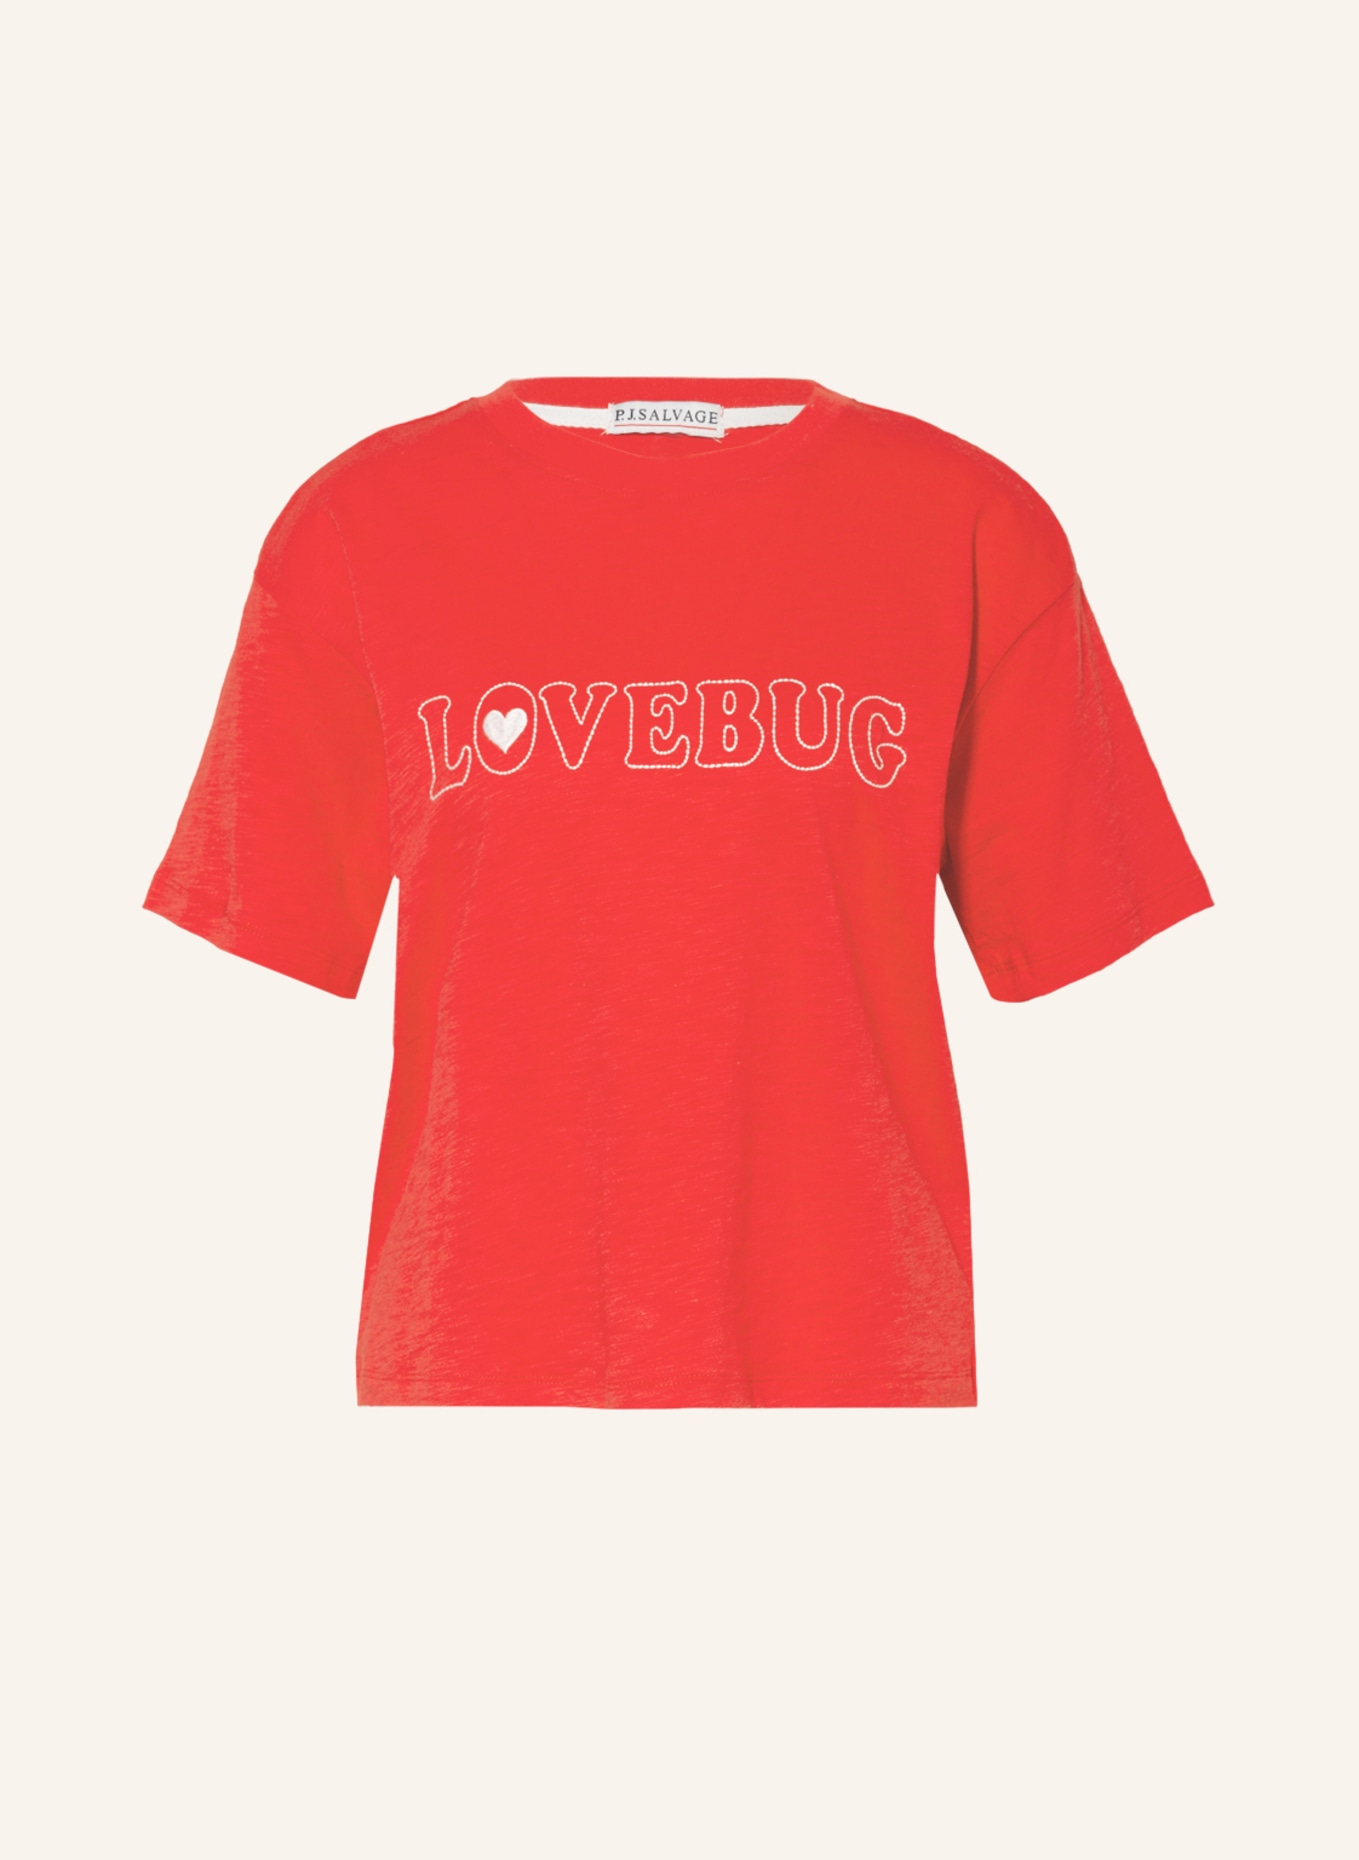 Рубашка P.J.Salvage Lounge-Shirt, красный